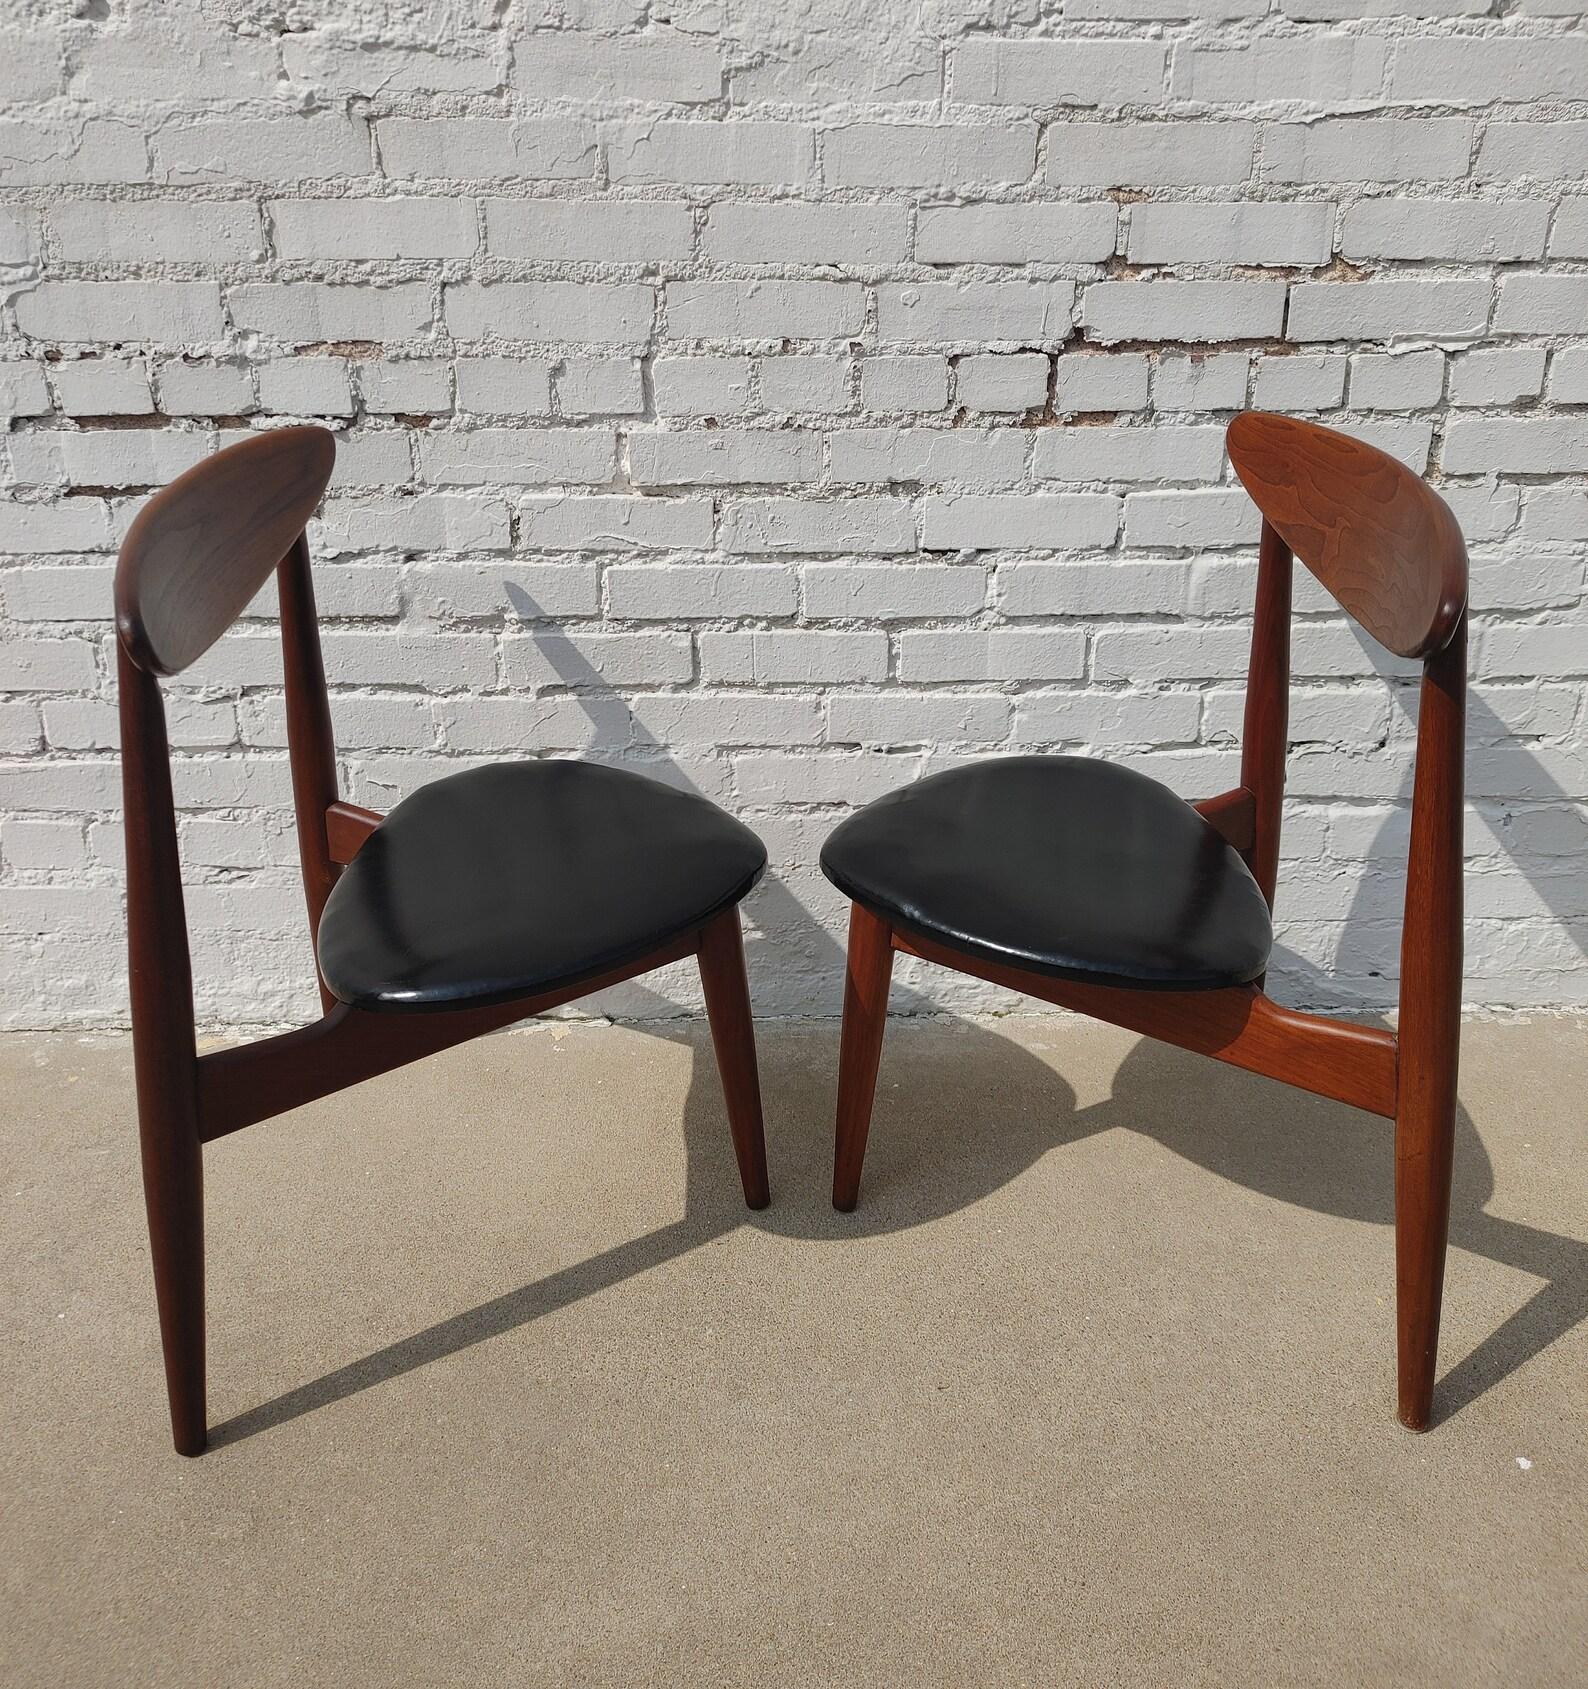 American Mid Century Modern Hans Wegner Inspired Dining Chairs